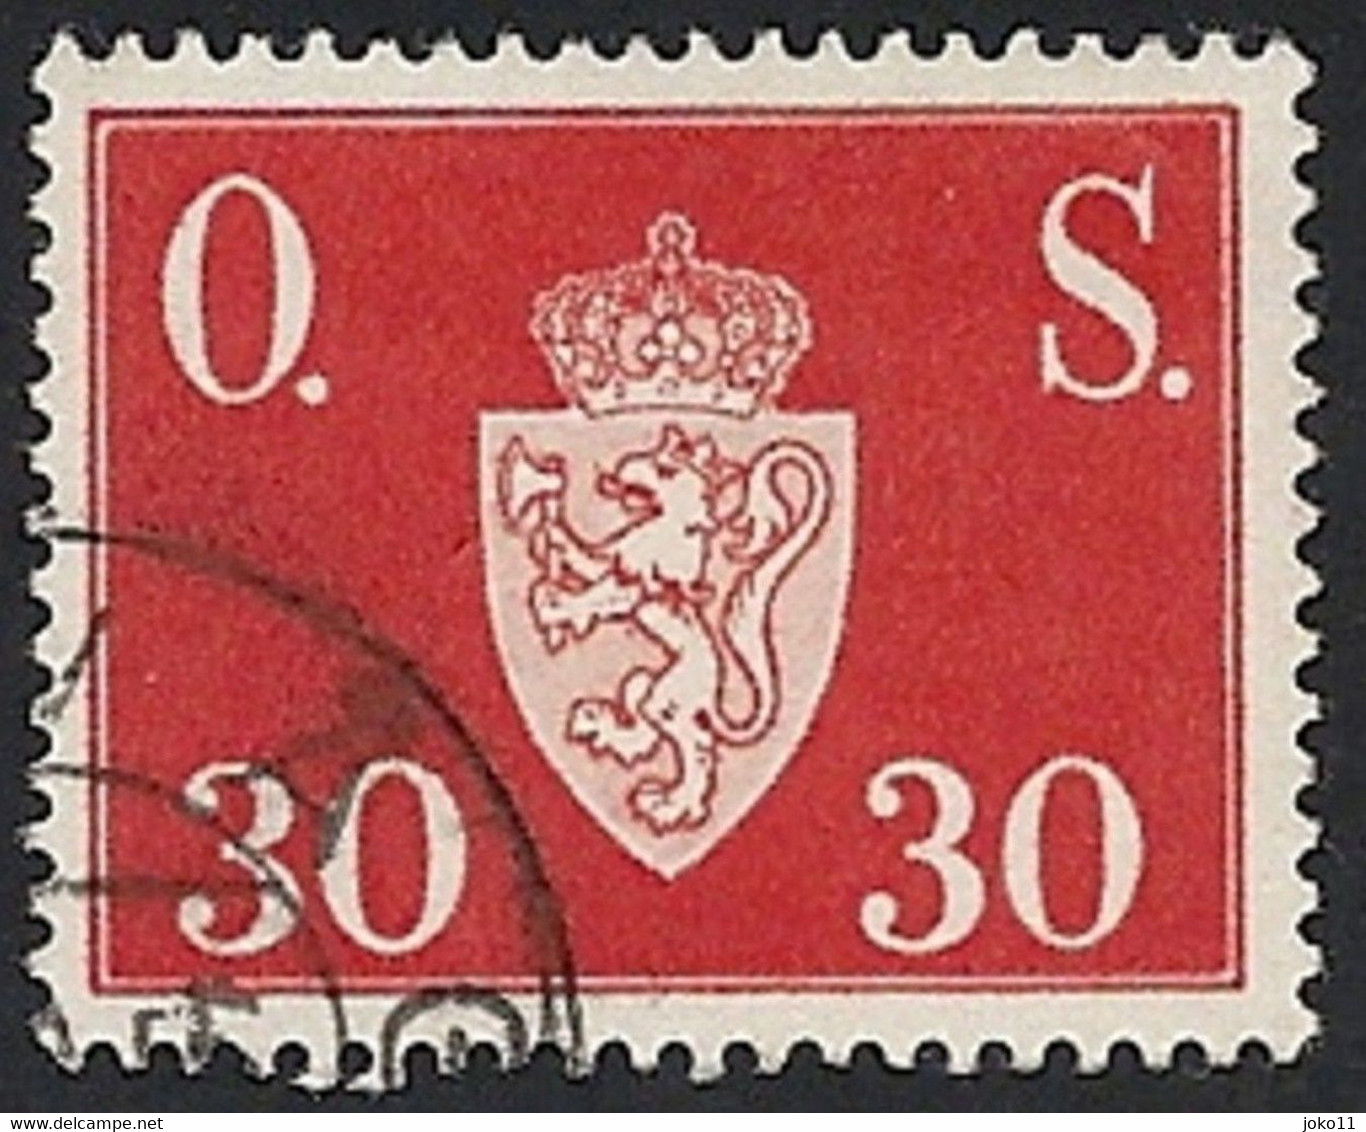 Norwegen Dienstm. 1951, Mi.-Nr. 64, Gestempelt - Service